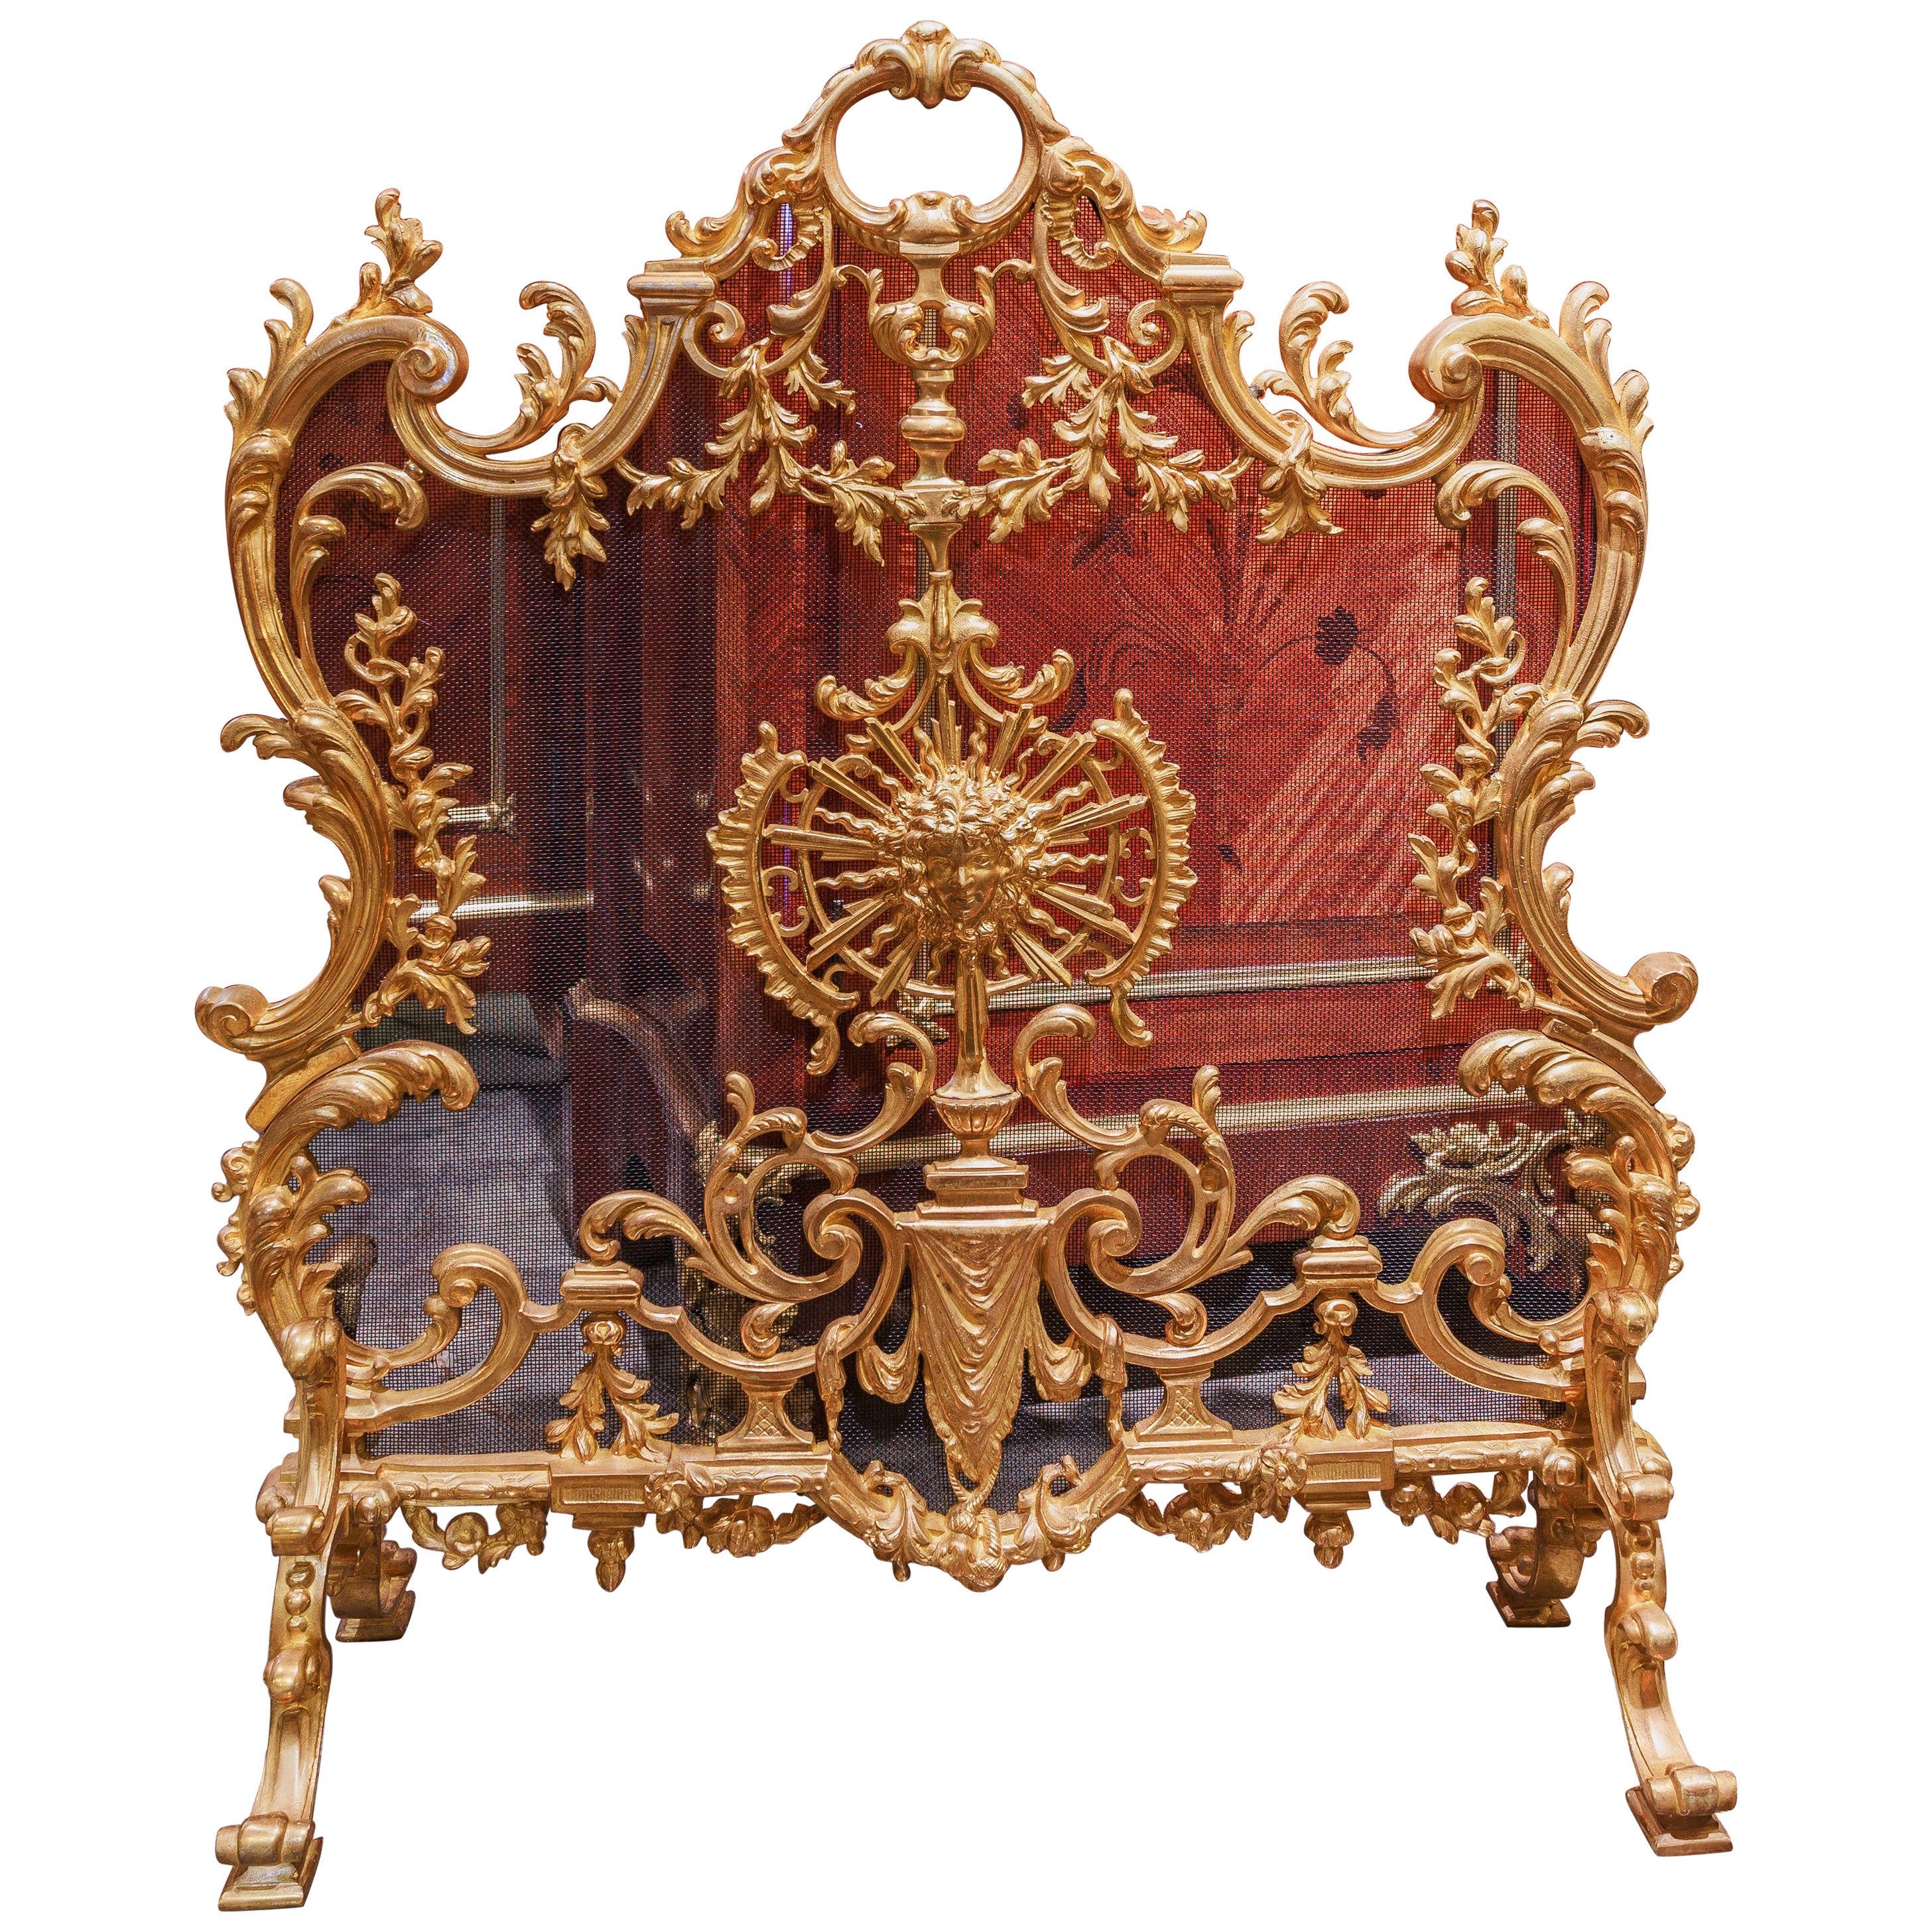 A fine 19th century French Louis XV gilt bronze fire screen